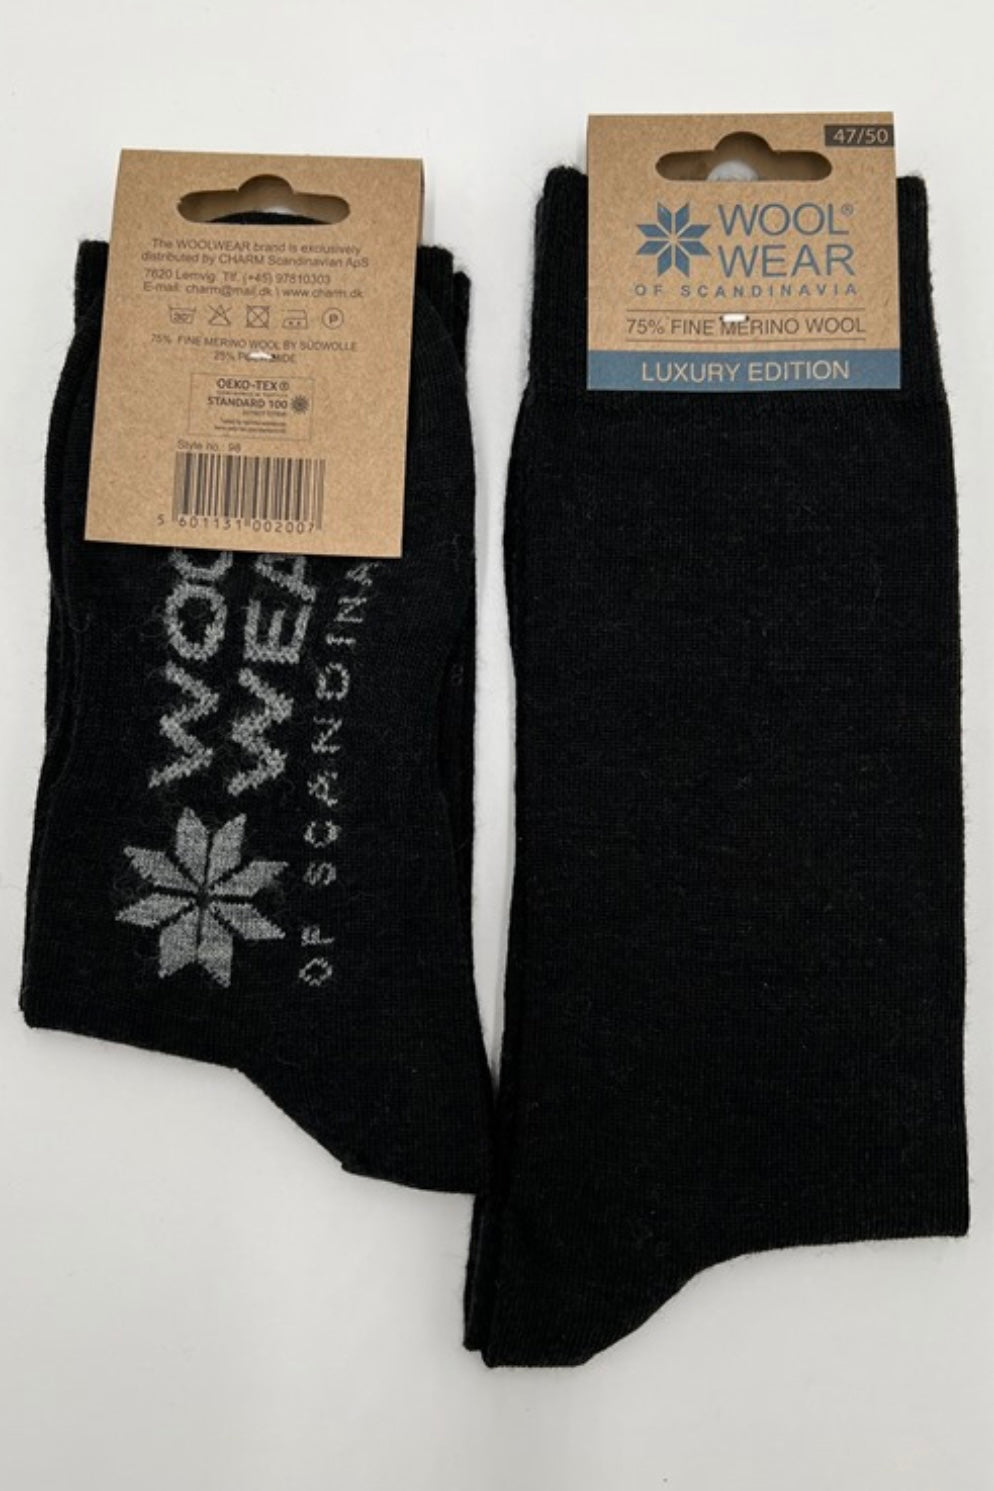 Thin Luxury Edition Merino Wool Socks from WOOLWEAR of Scandinavia®